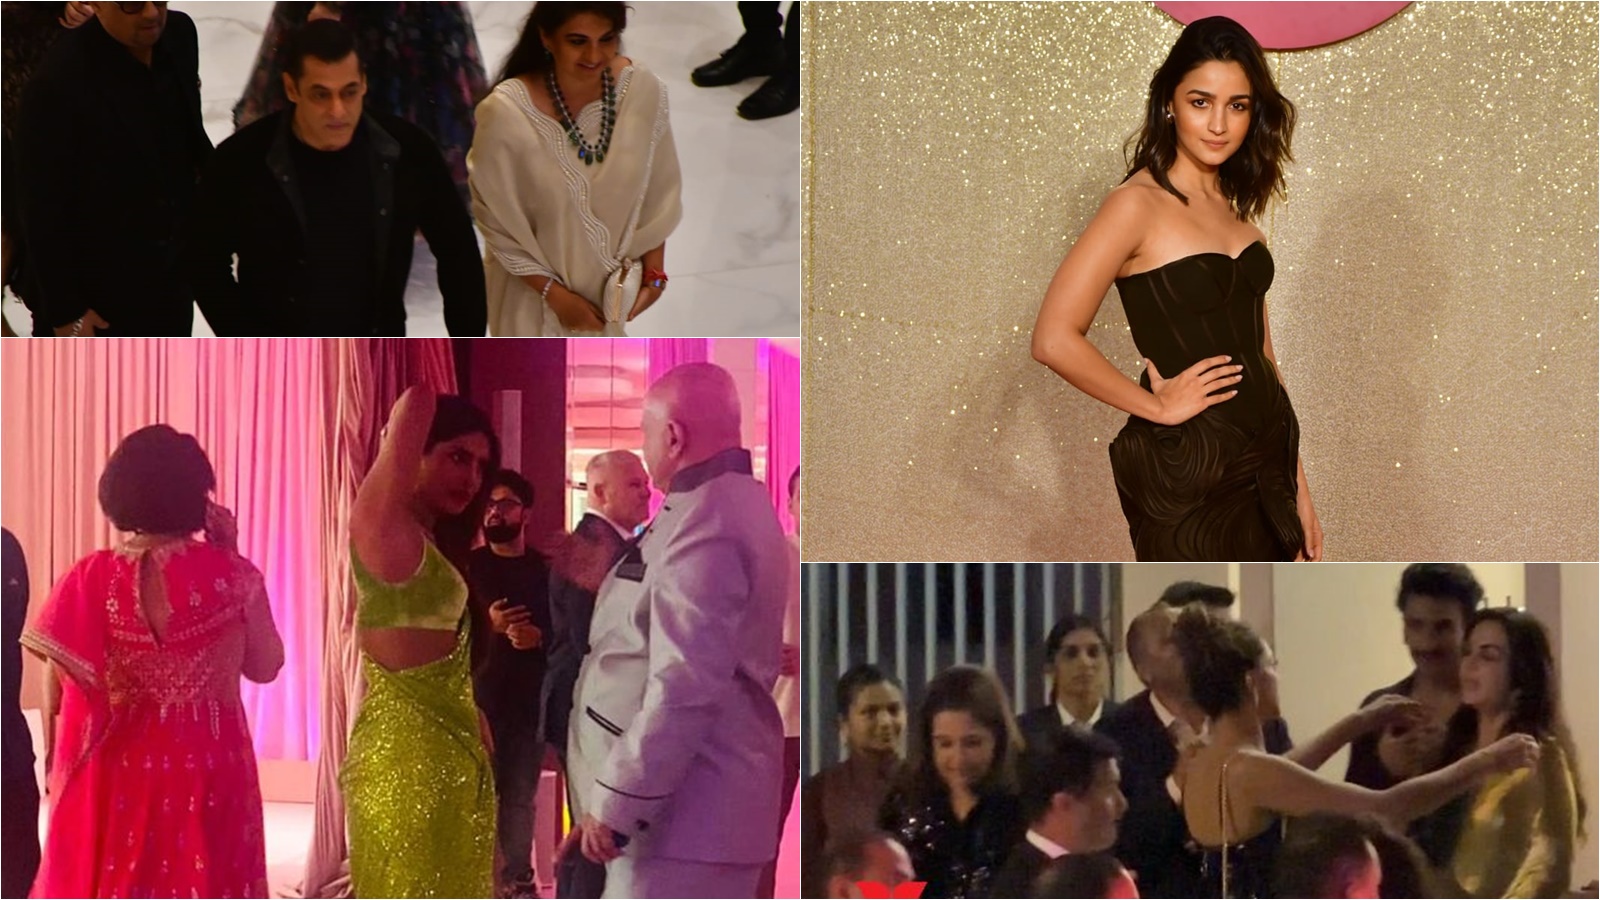 Shah Rukh Khan, Priyanka Chopra make low-key appearances at Jio World Plaza  launch event; Deepika, Alia, Katrina light up red carpet | Bollywood News -  The Indian Express